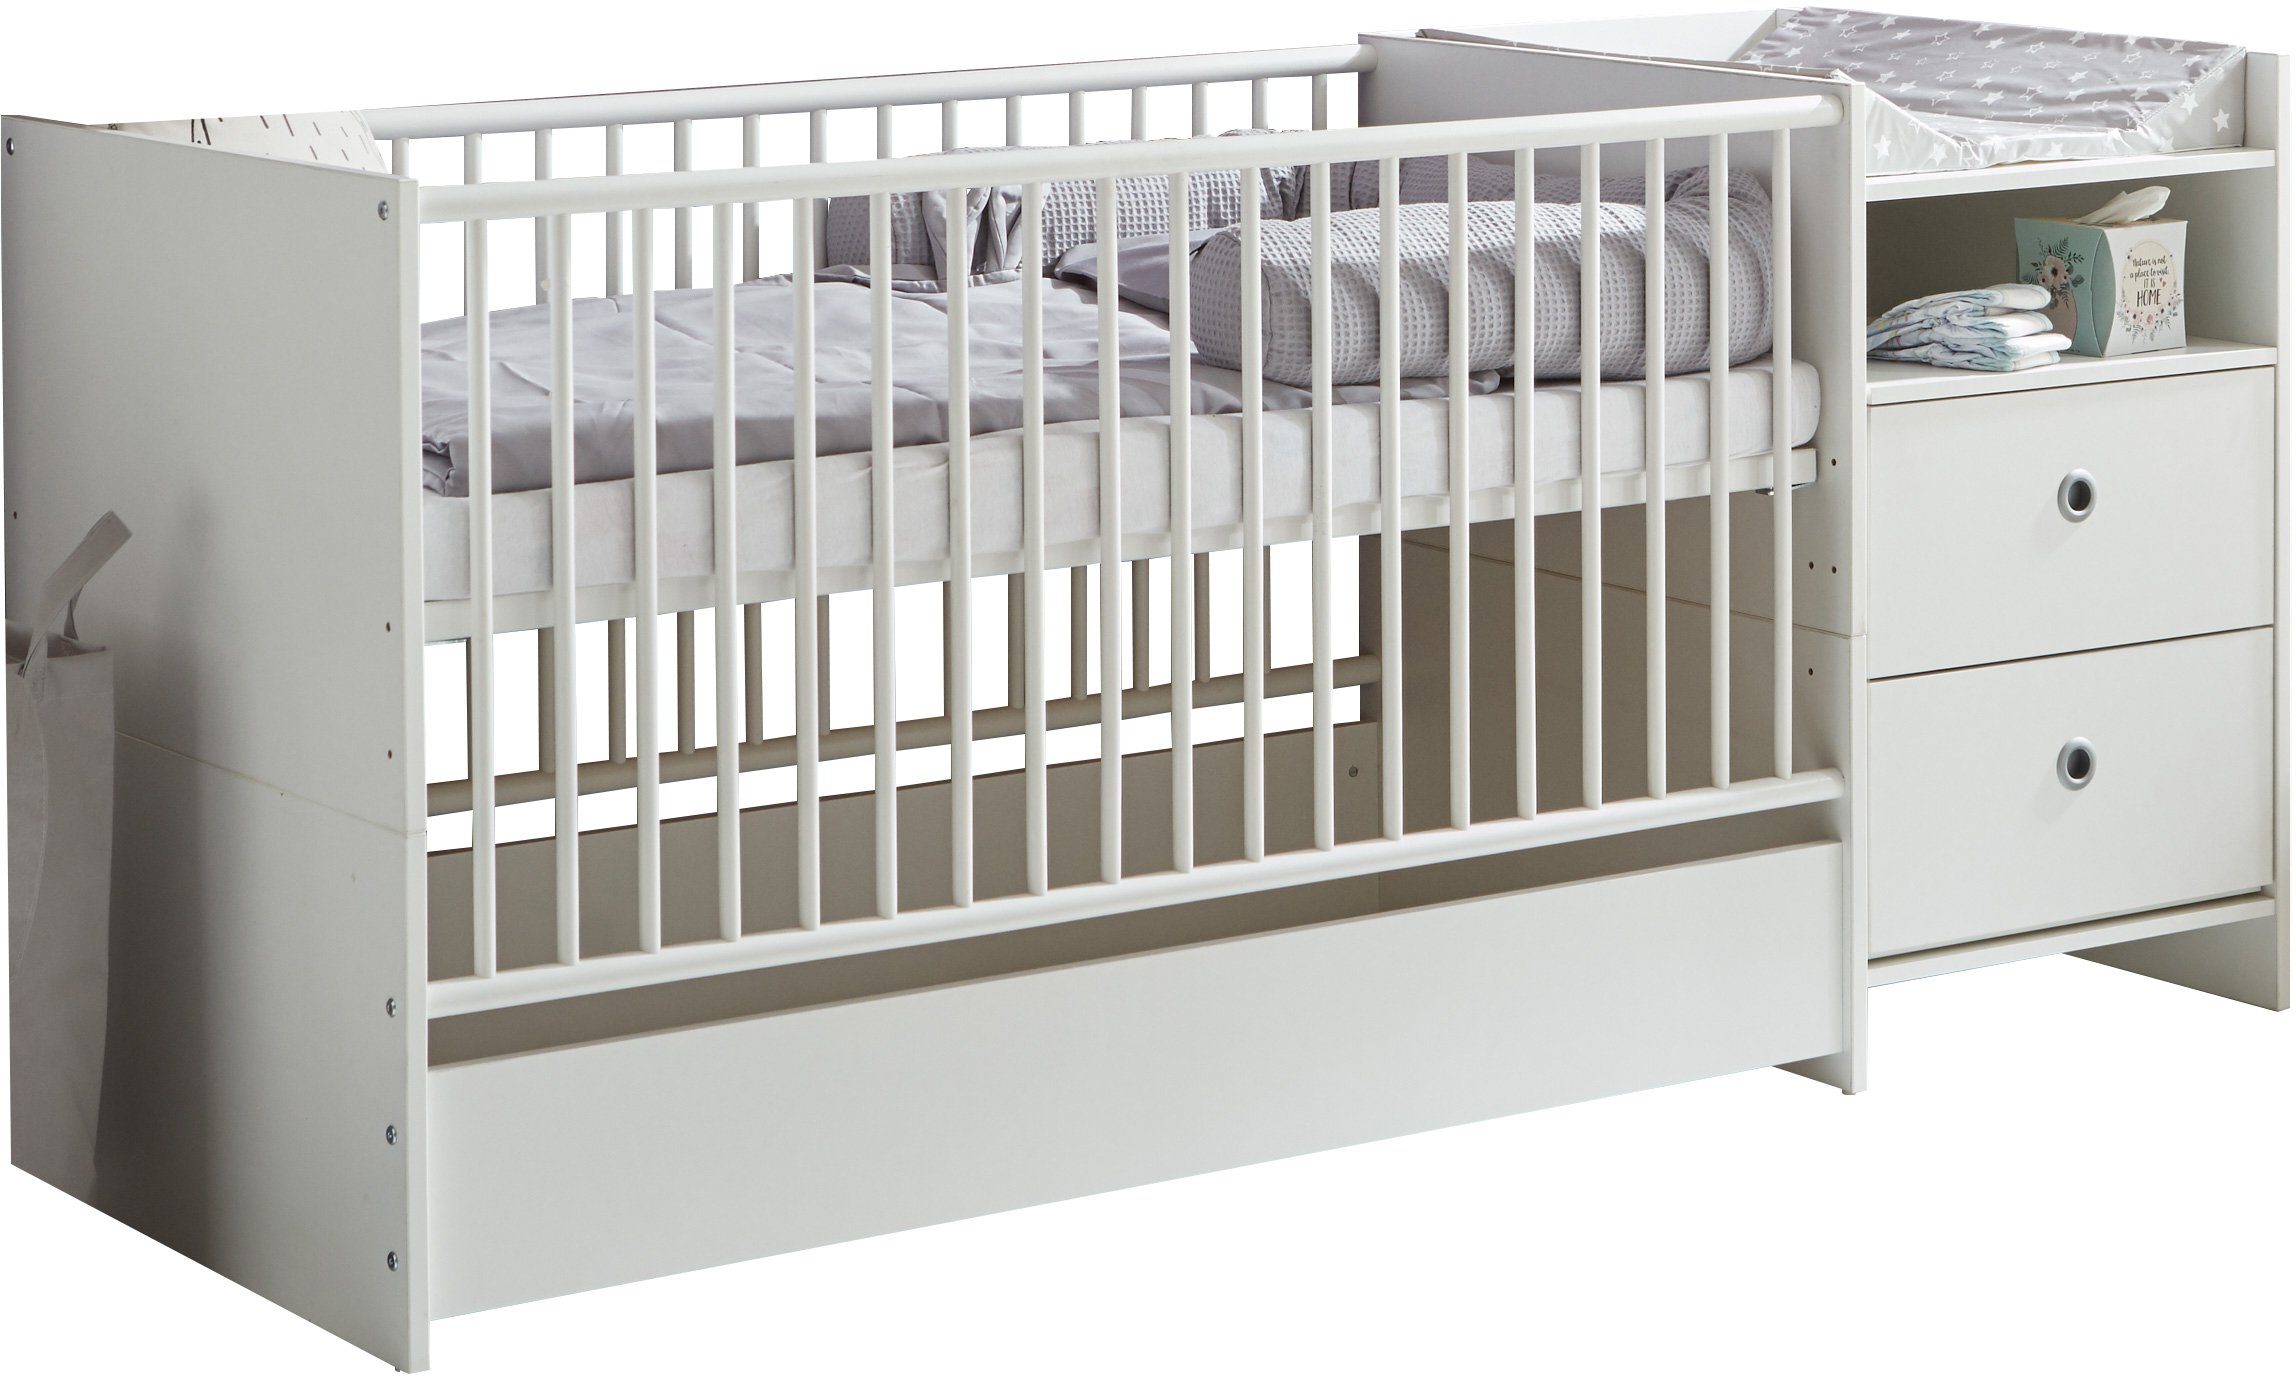 Babybett Kinderbett 140×70 Weiß Bettwäsche Komplett Wickelbrett Wickelauflage 